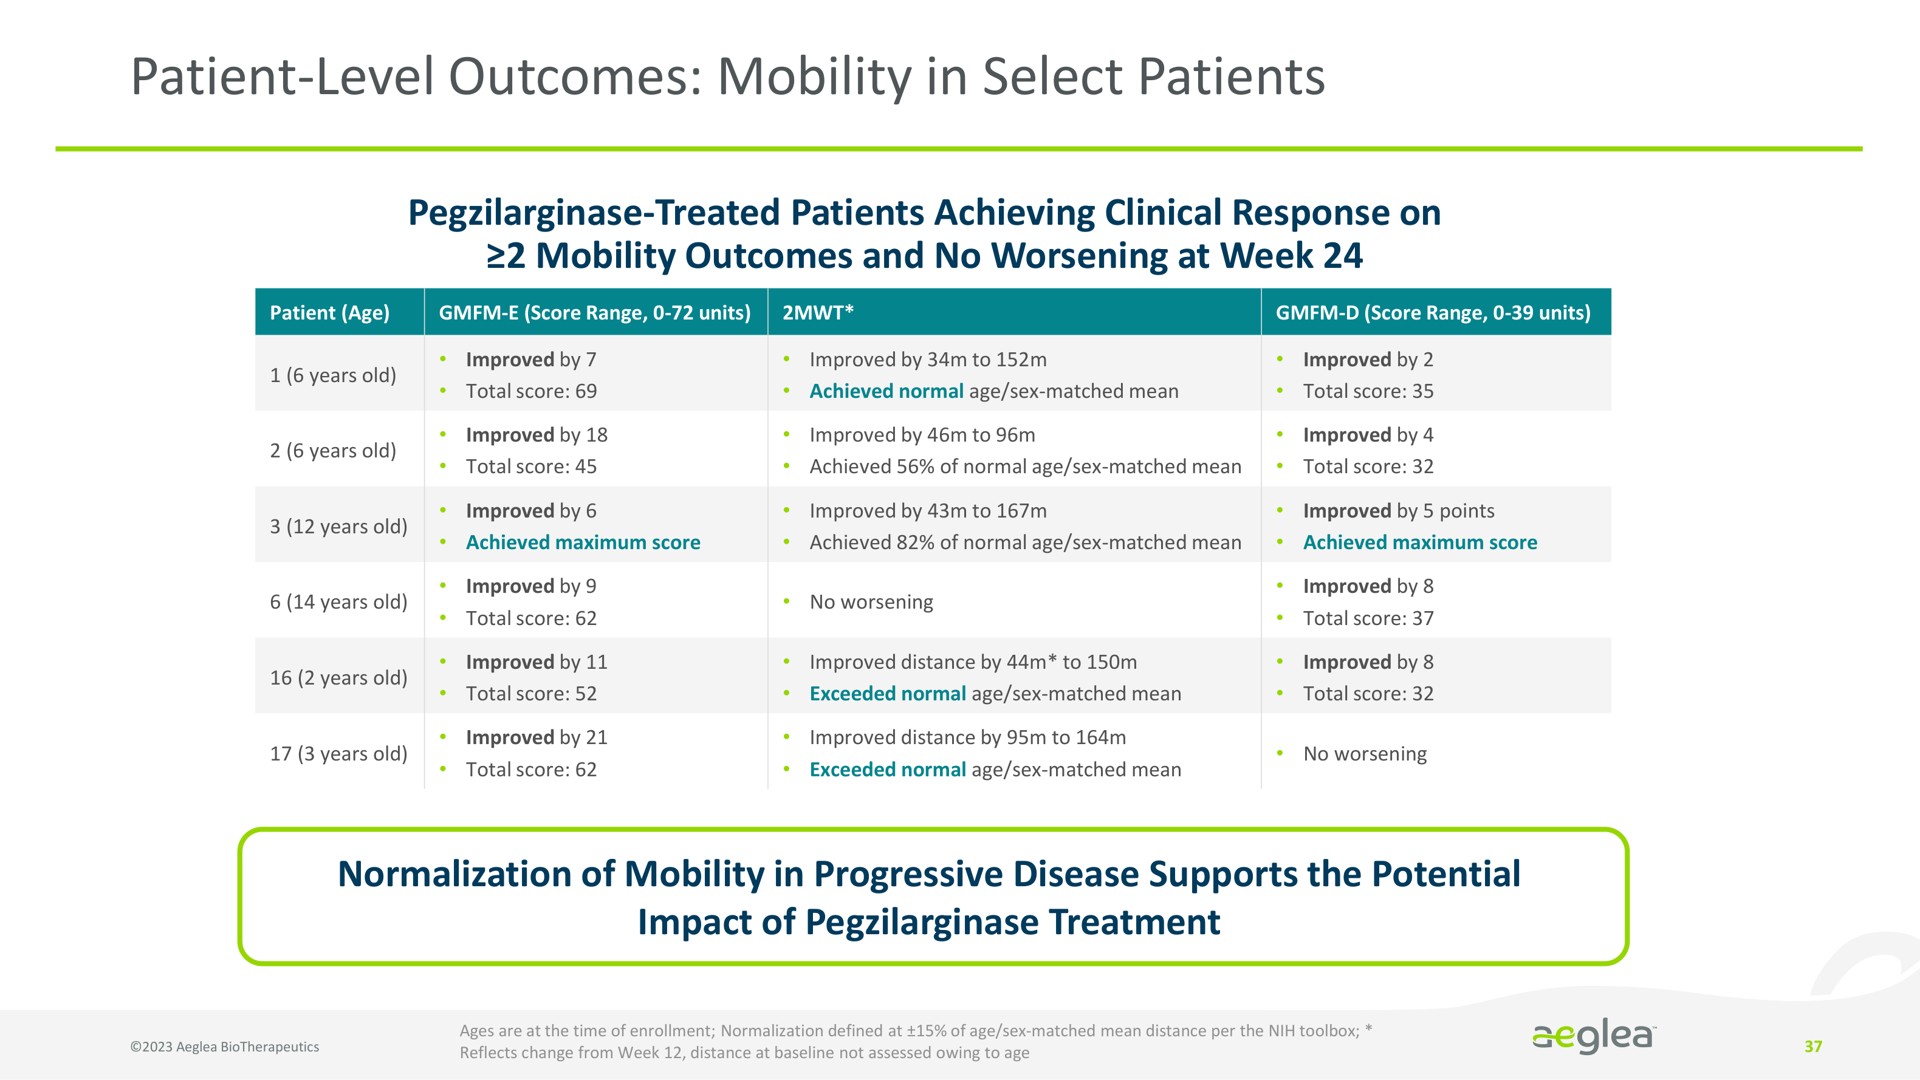 patient level outcomes mobility in select patients | Aeglea BioTherapeutics